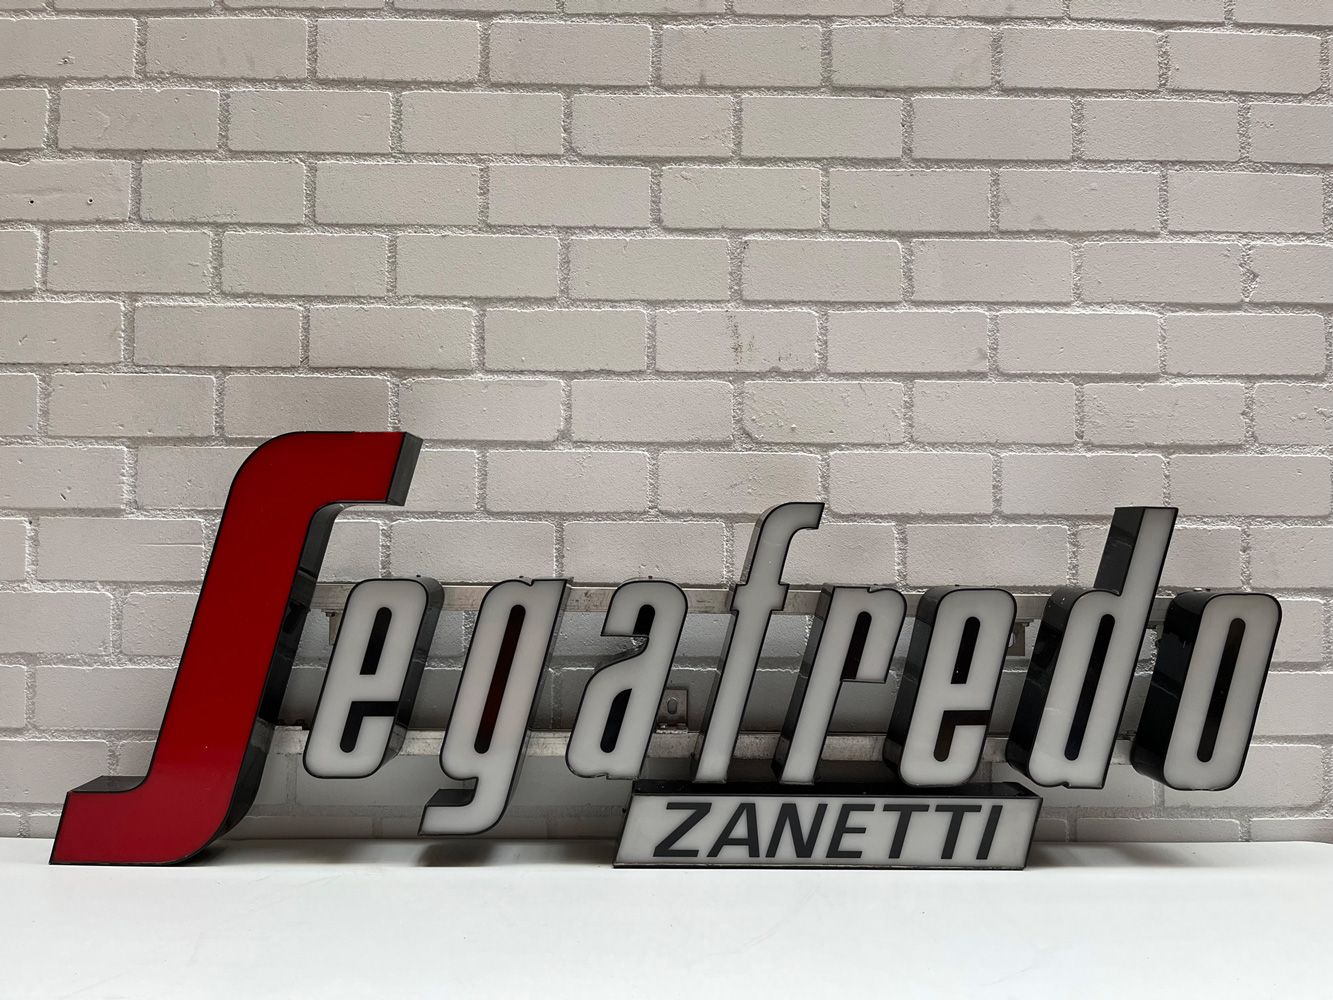 Segafredo Zanetti Front Lit Channel Letters Sign Segafredo Zanetti(意大利咖啡生产商)的正面发&hellip;